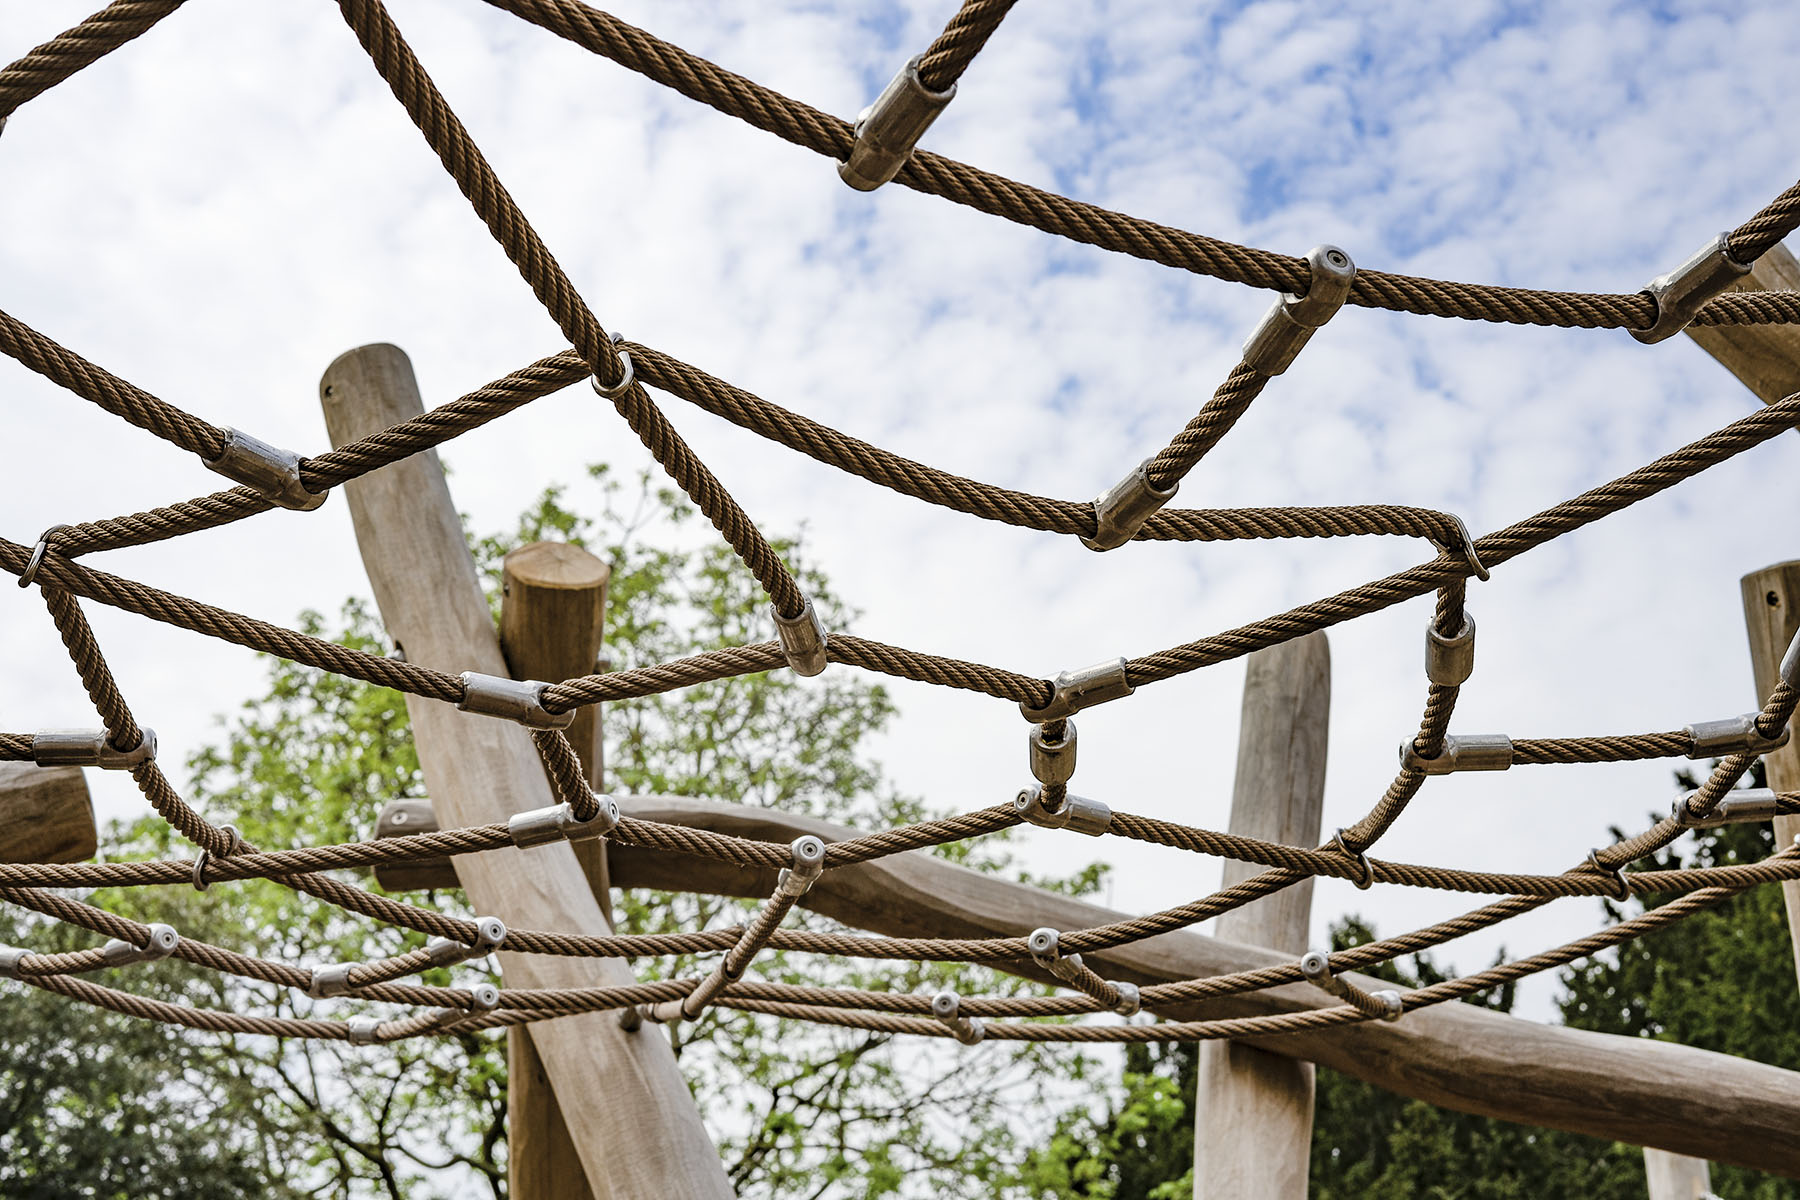 natural playground equipment log climbing frame